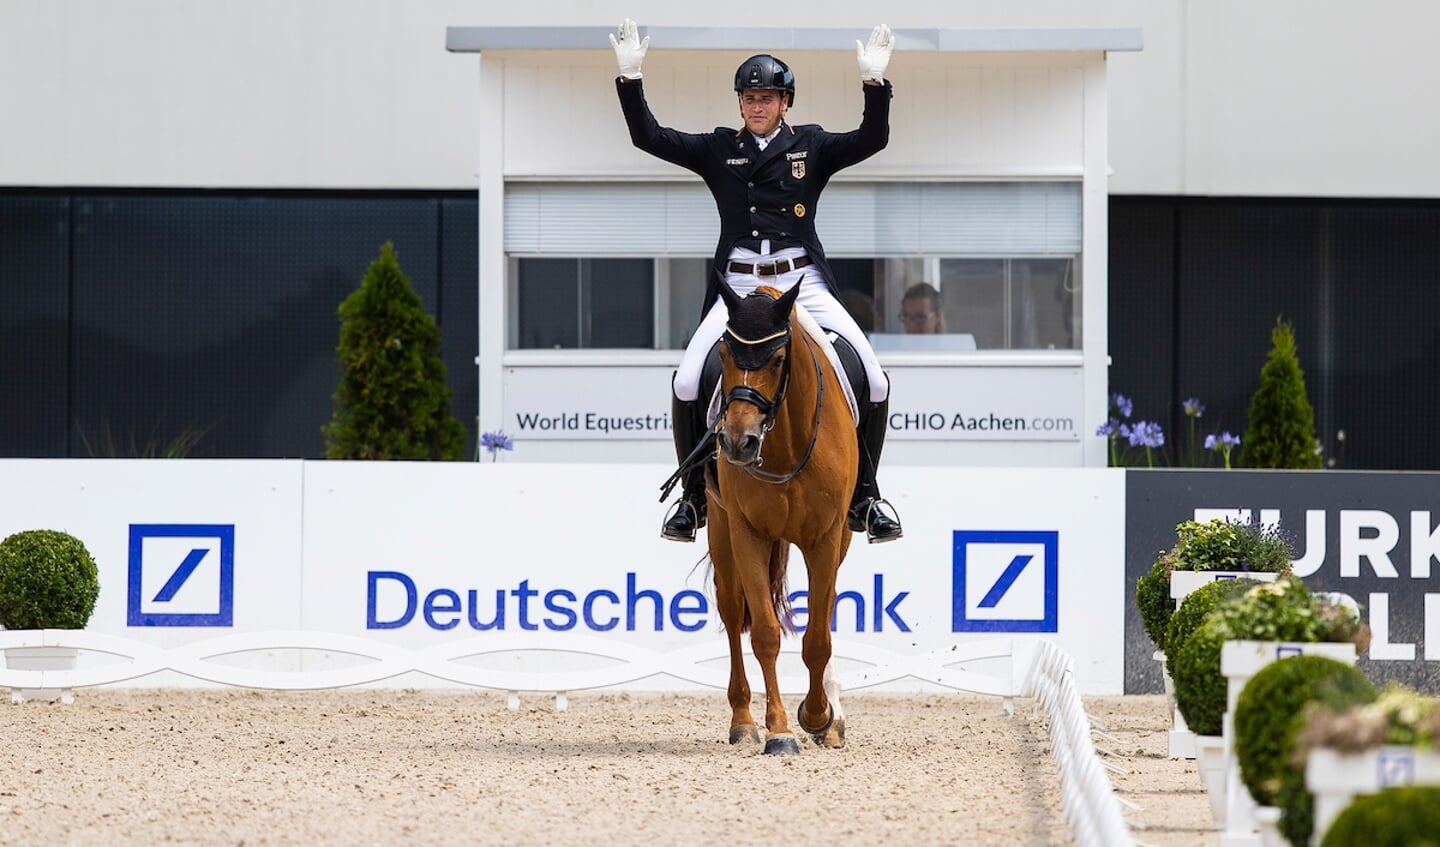 Frederic Wandres - Duke of Britain FRH
World Equestrian Festival CHIO Aachen 2022
© DigiShots